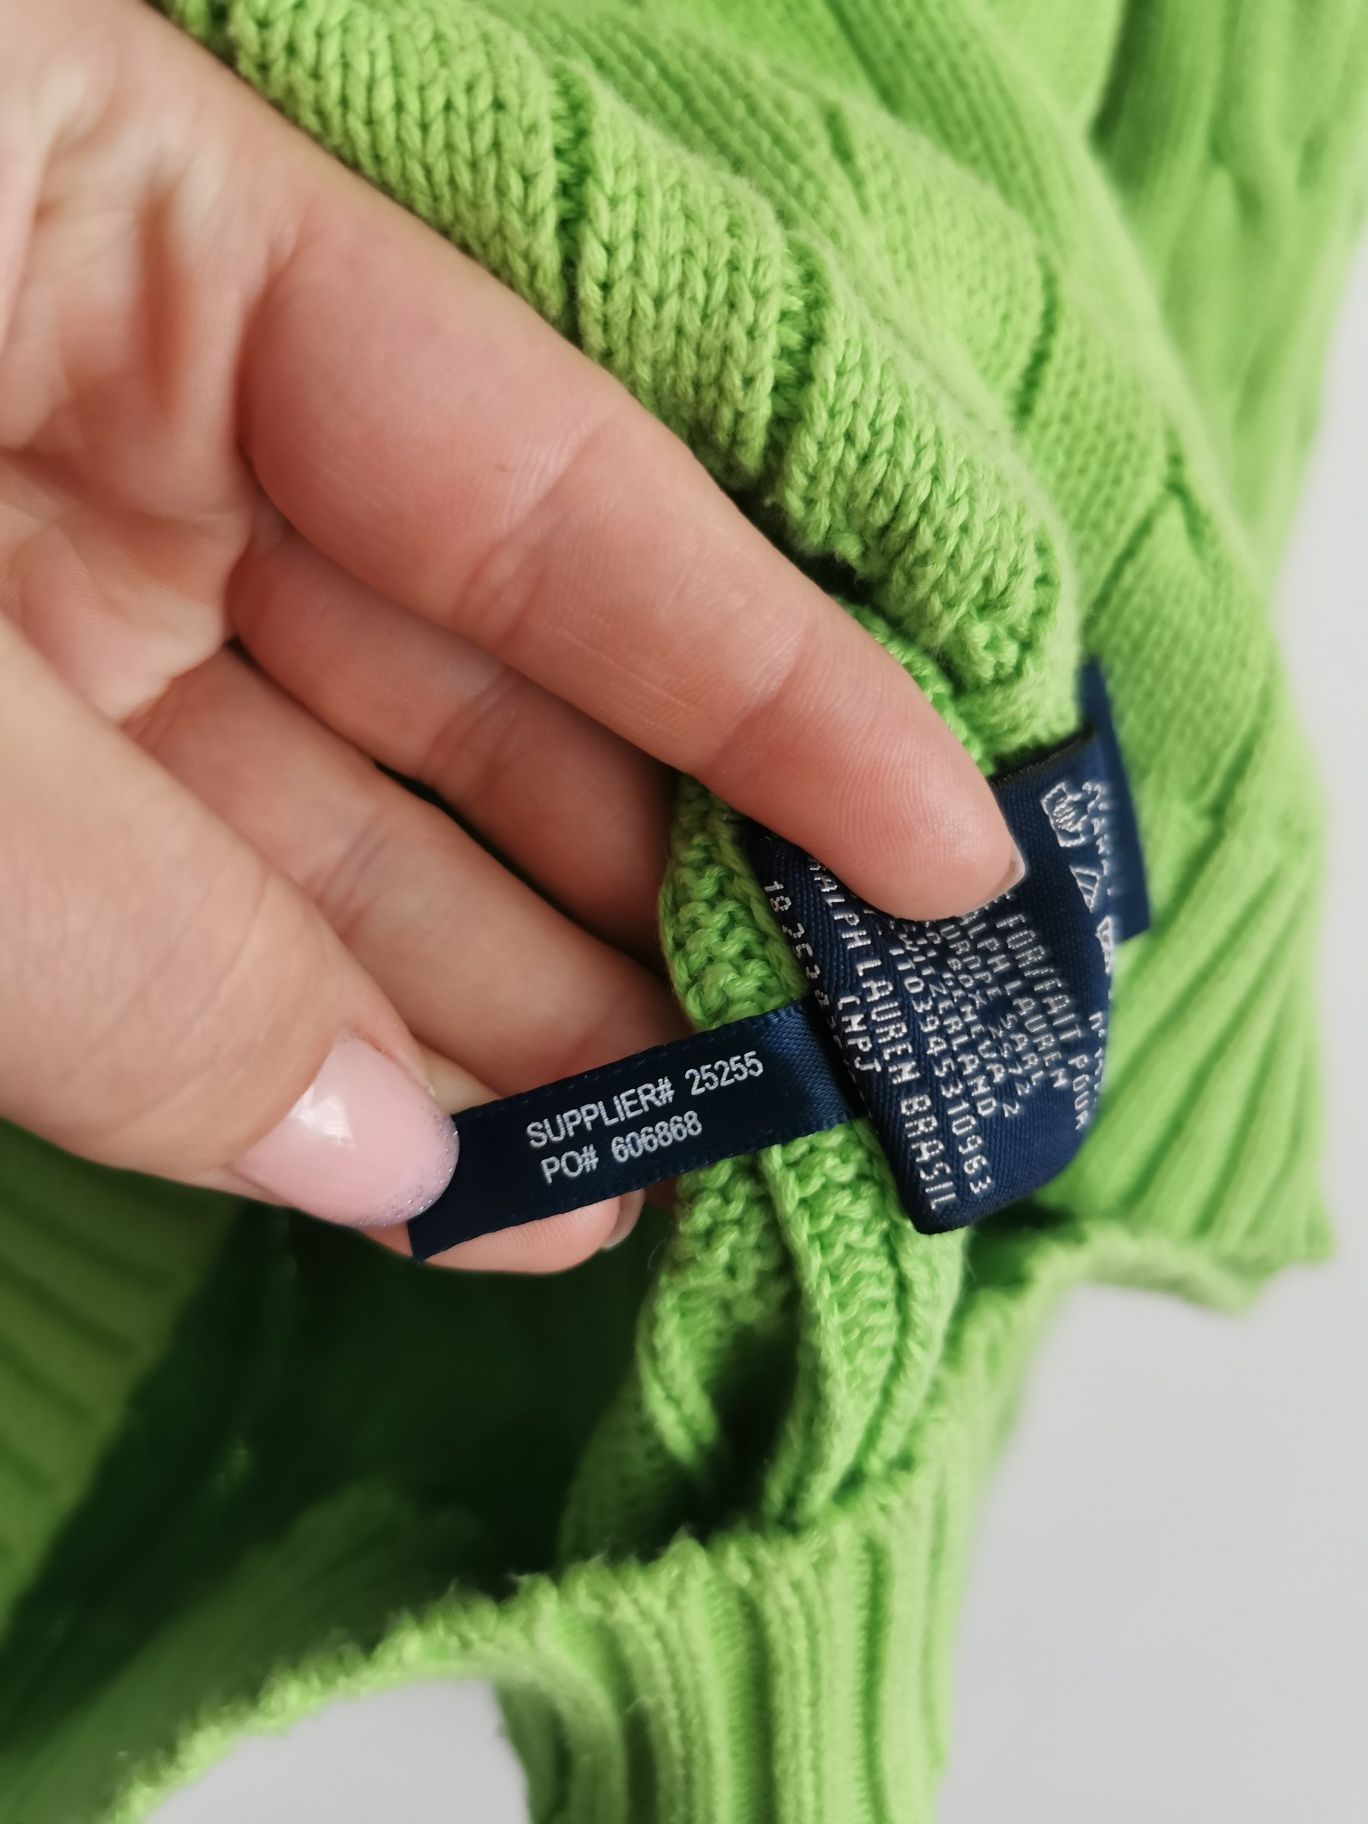 Ralph Lauren sweter warkocz damski logowany bawełniany M/L